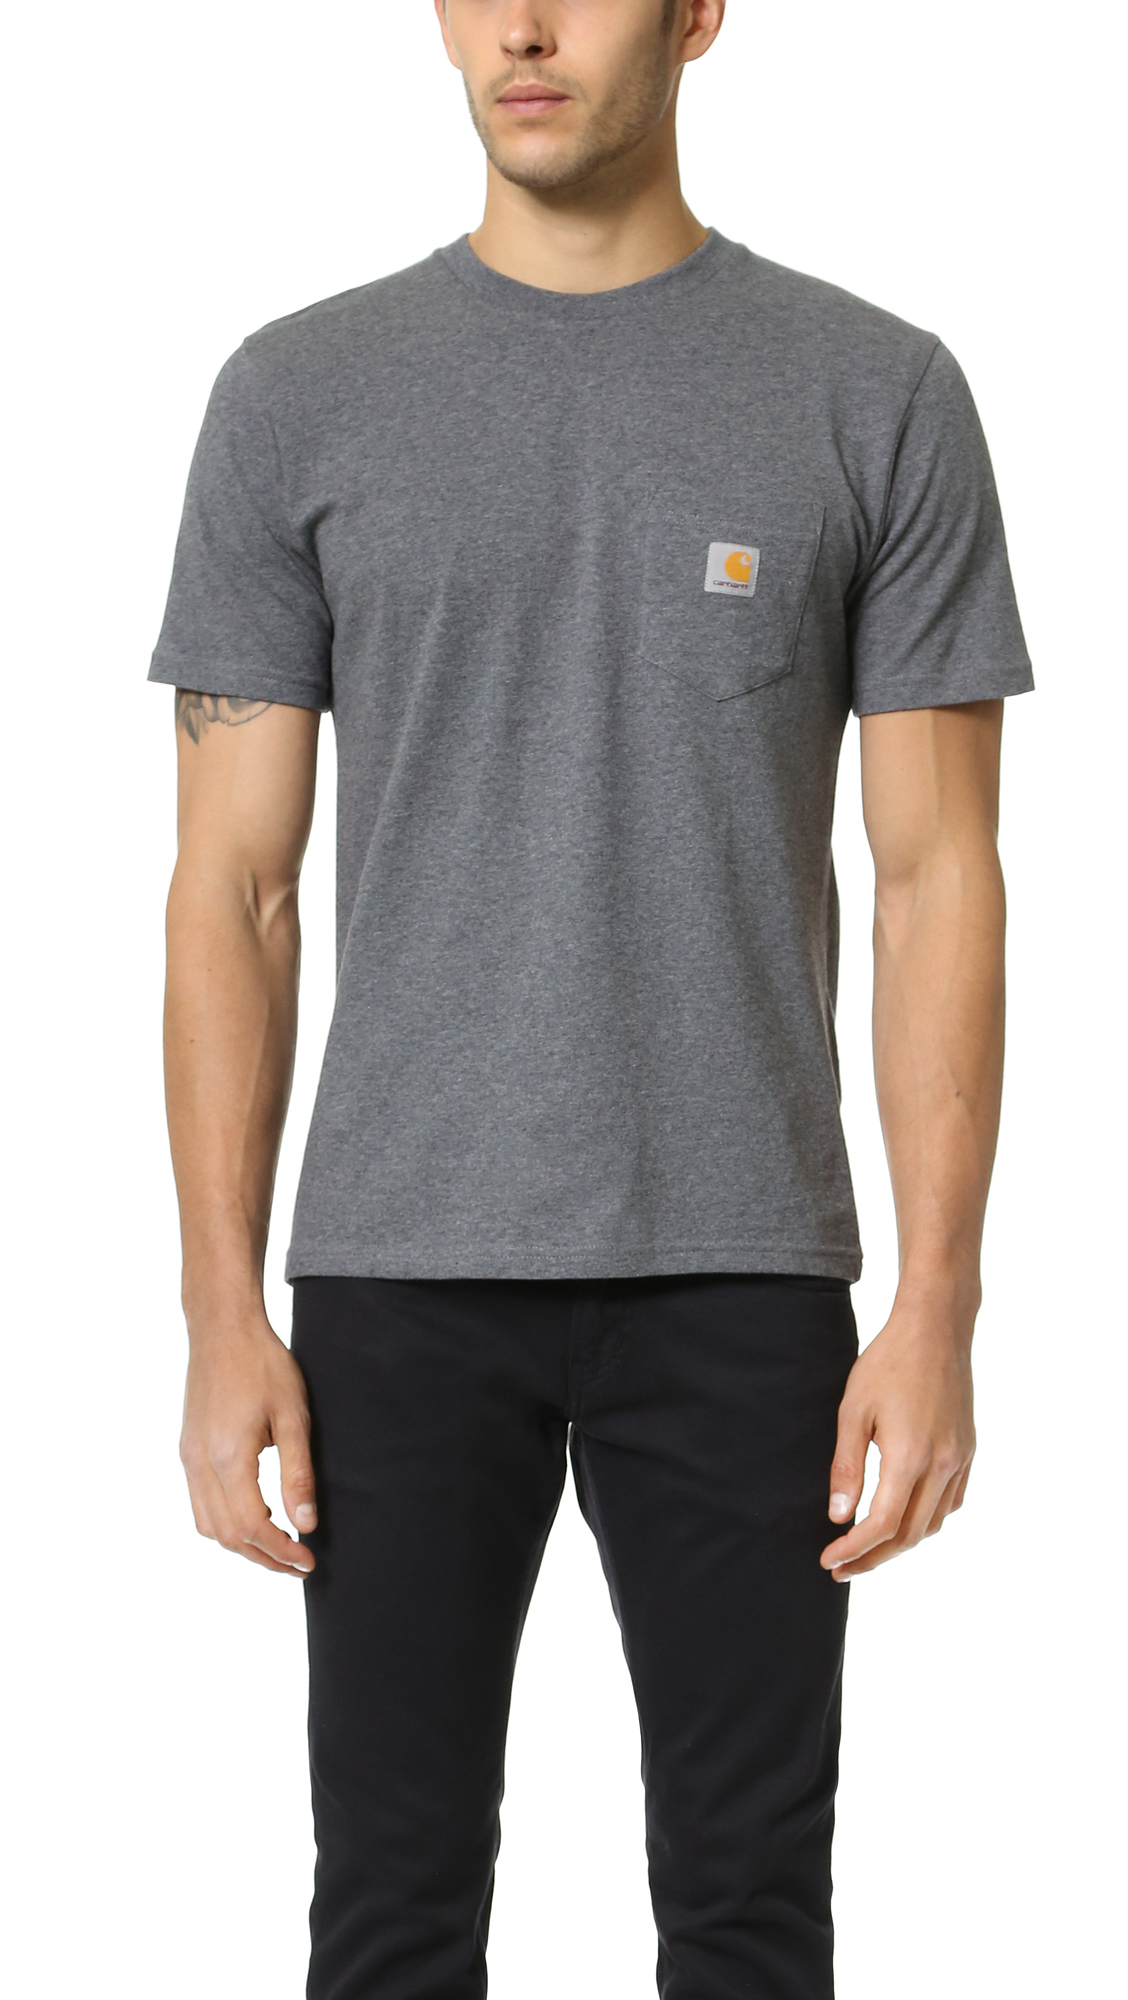 Lyst - Carhartt Wip Pocket T-shirt in Gray for Men